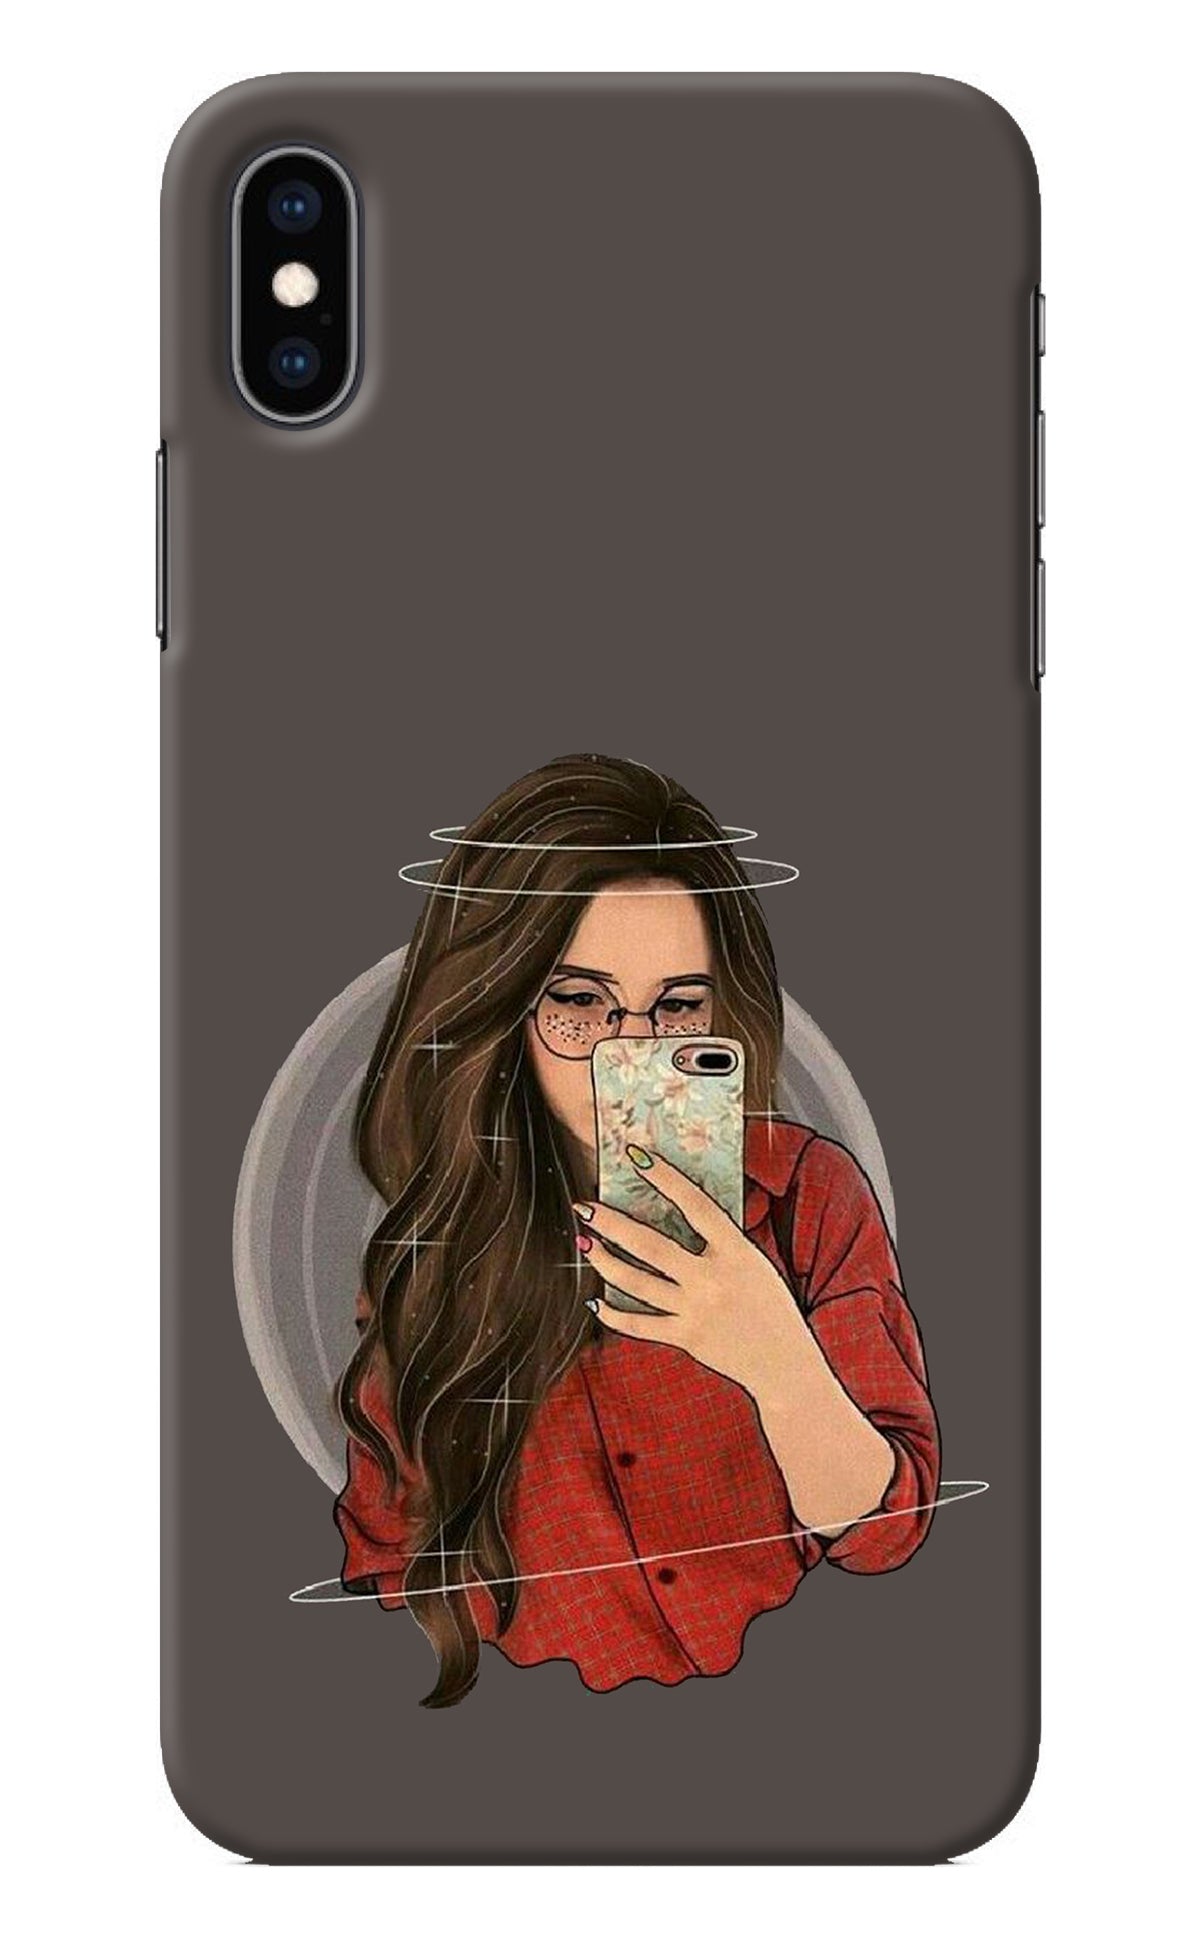 Selfie Queen iPhone XS Max Back Cover